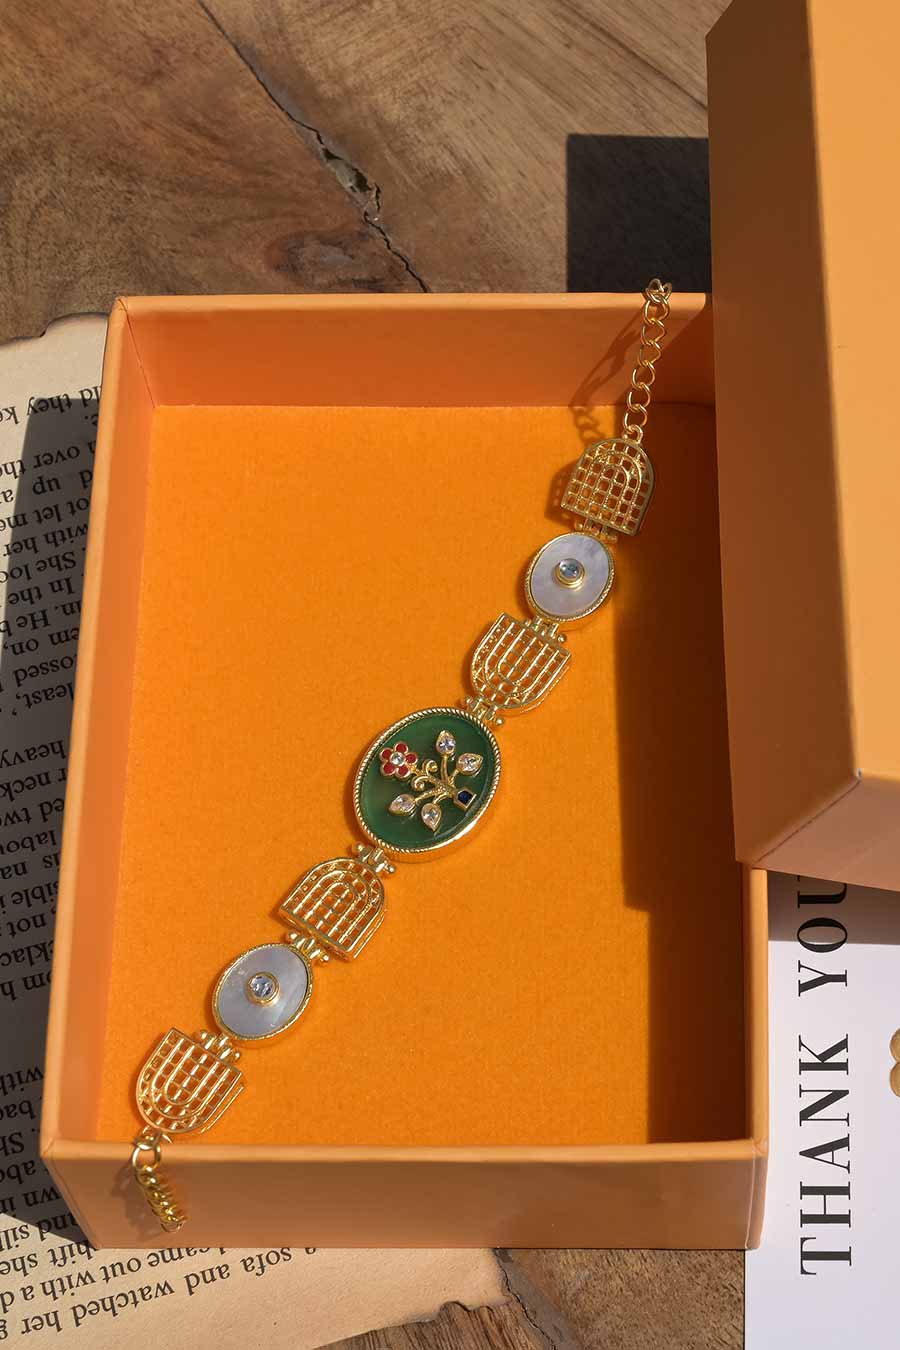 Onyx Modern Begum Gold Plated Bracelet